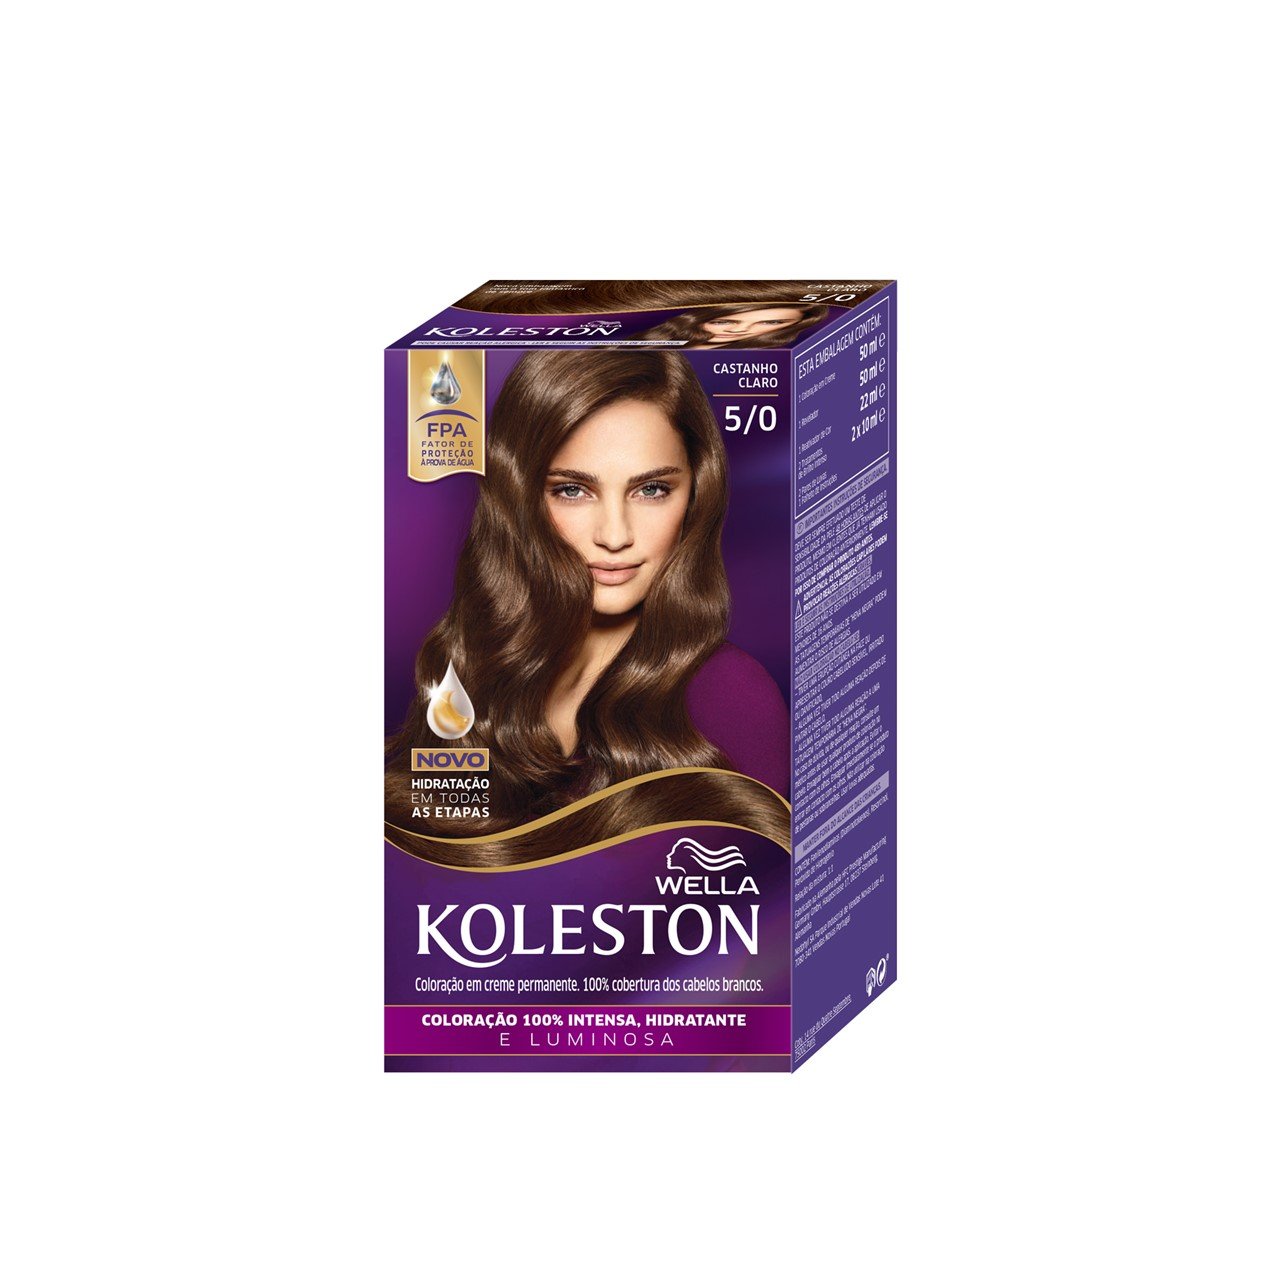 Wella Koleston 5/0 Light Brown Permanent Hair Color